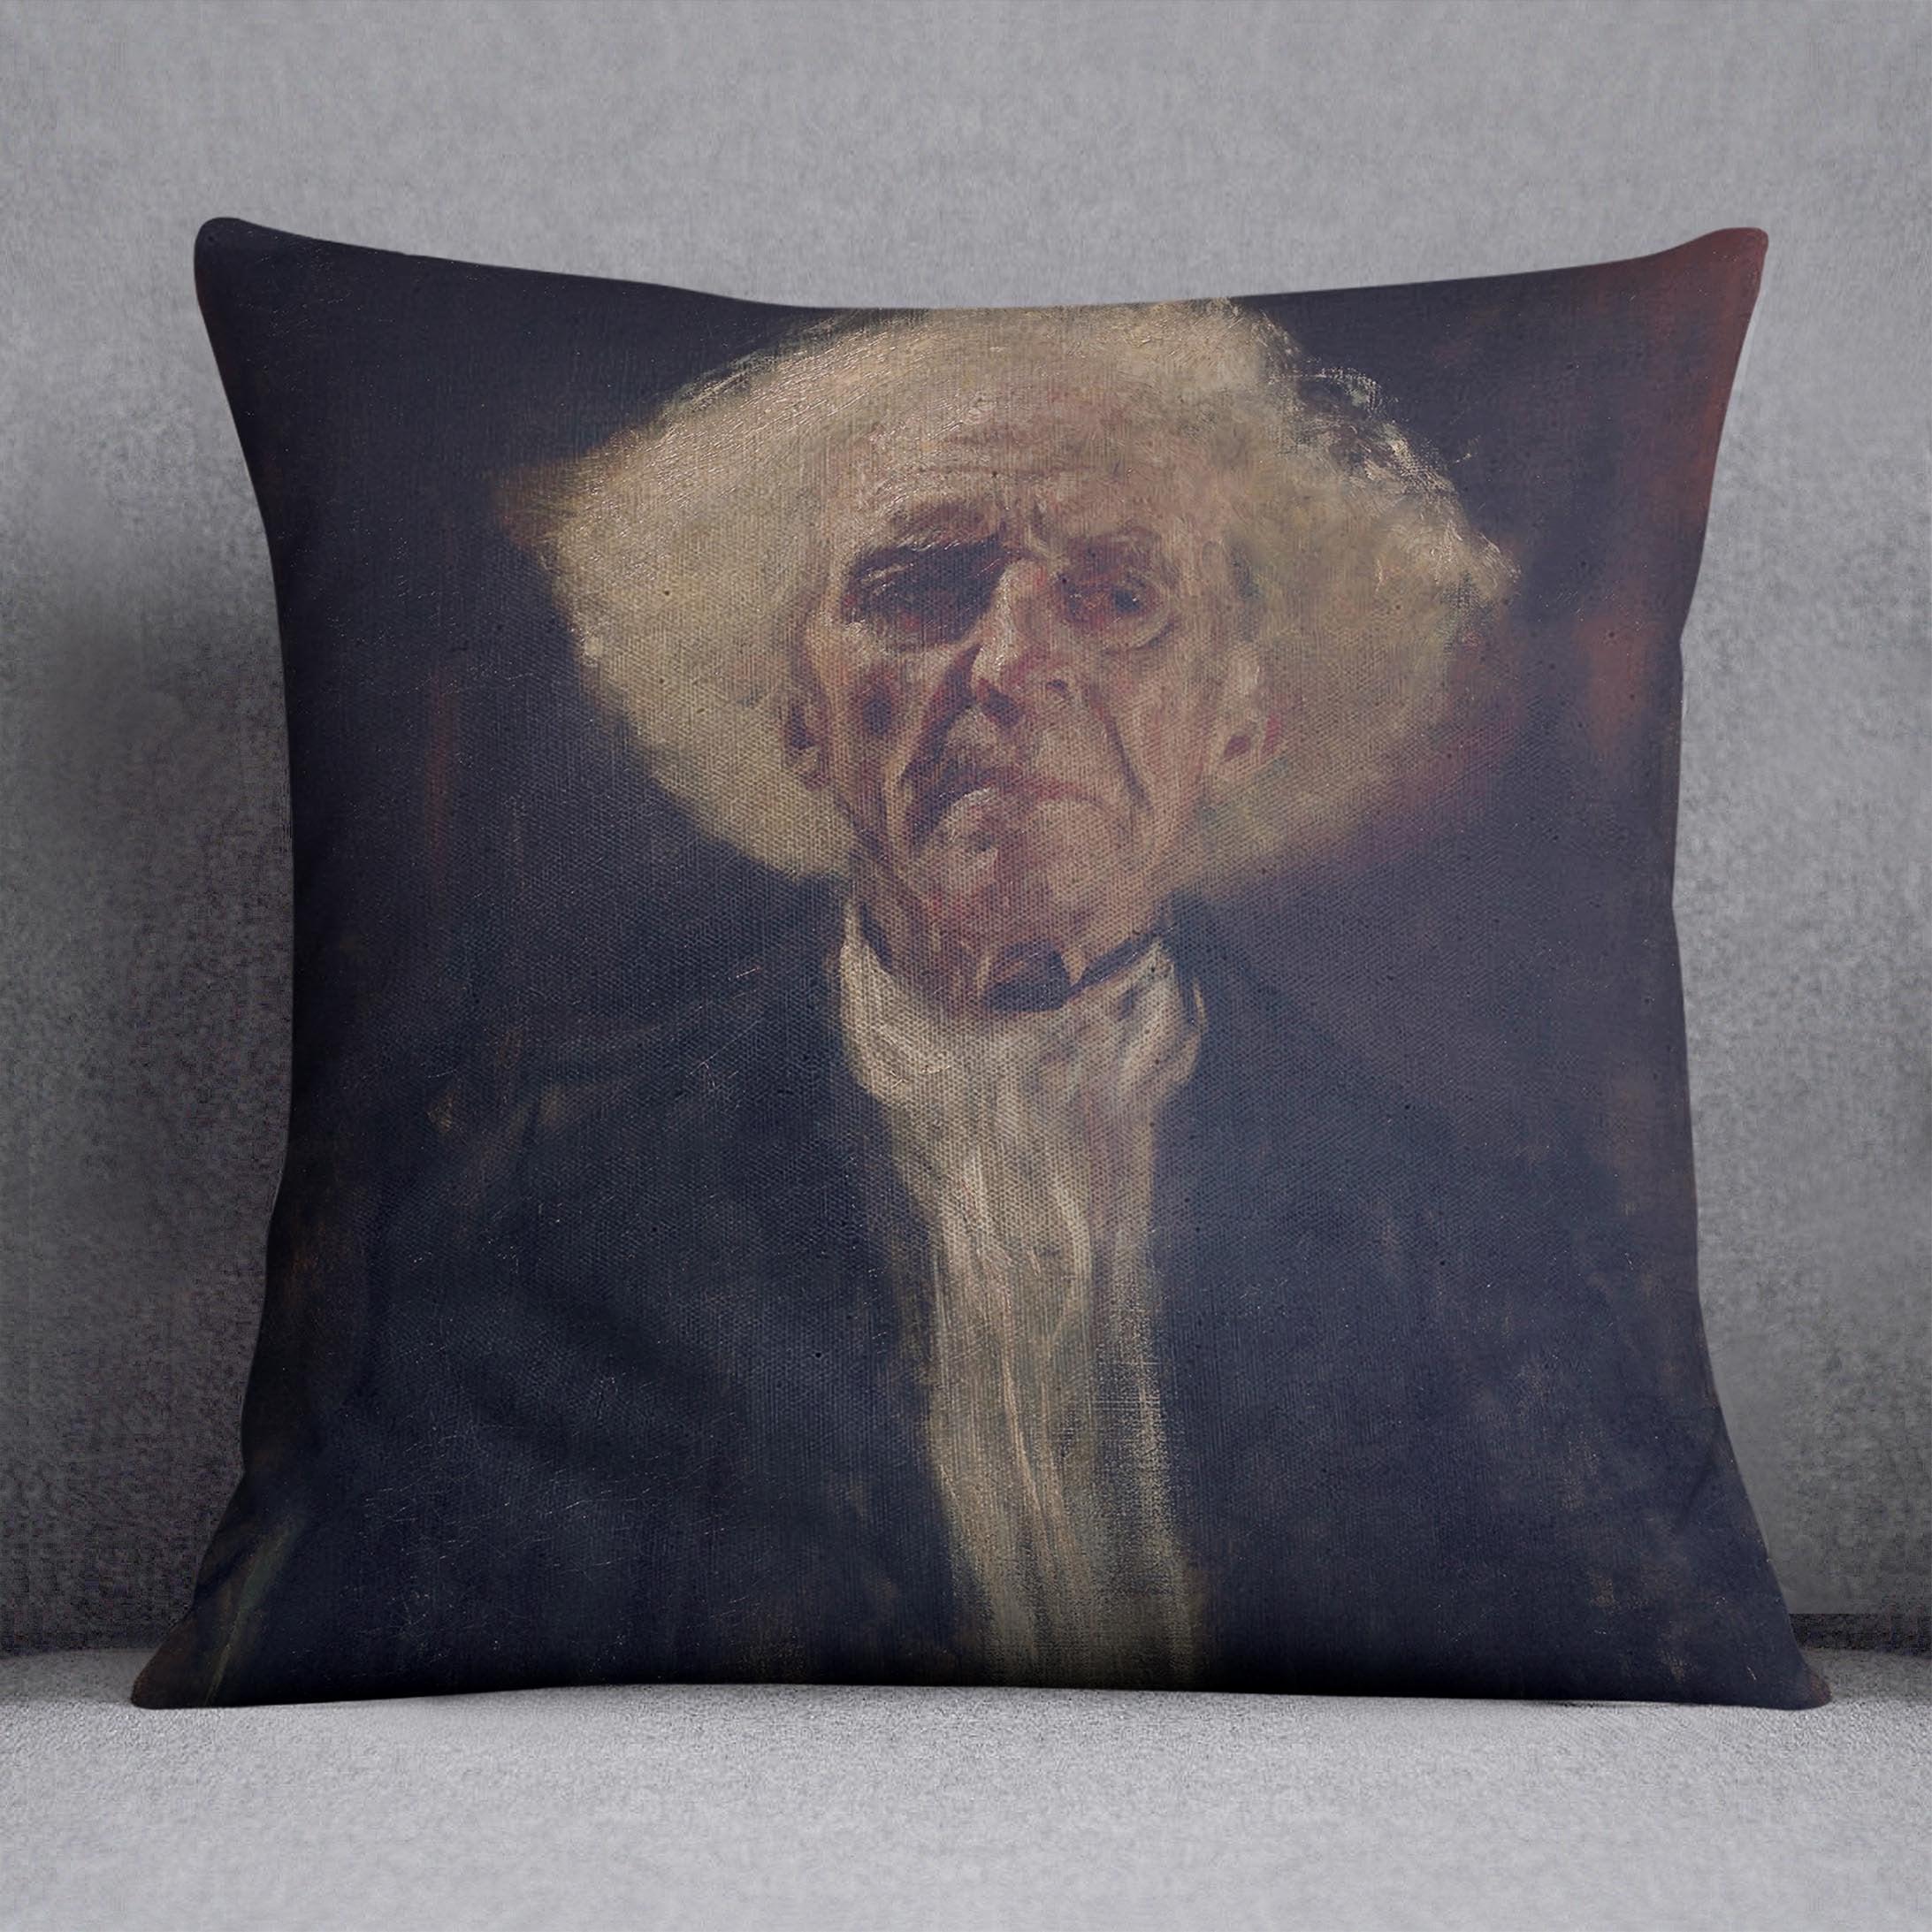 Blind Man by Klimt Throw Pillow